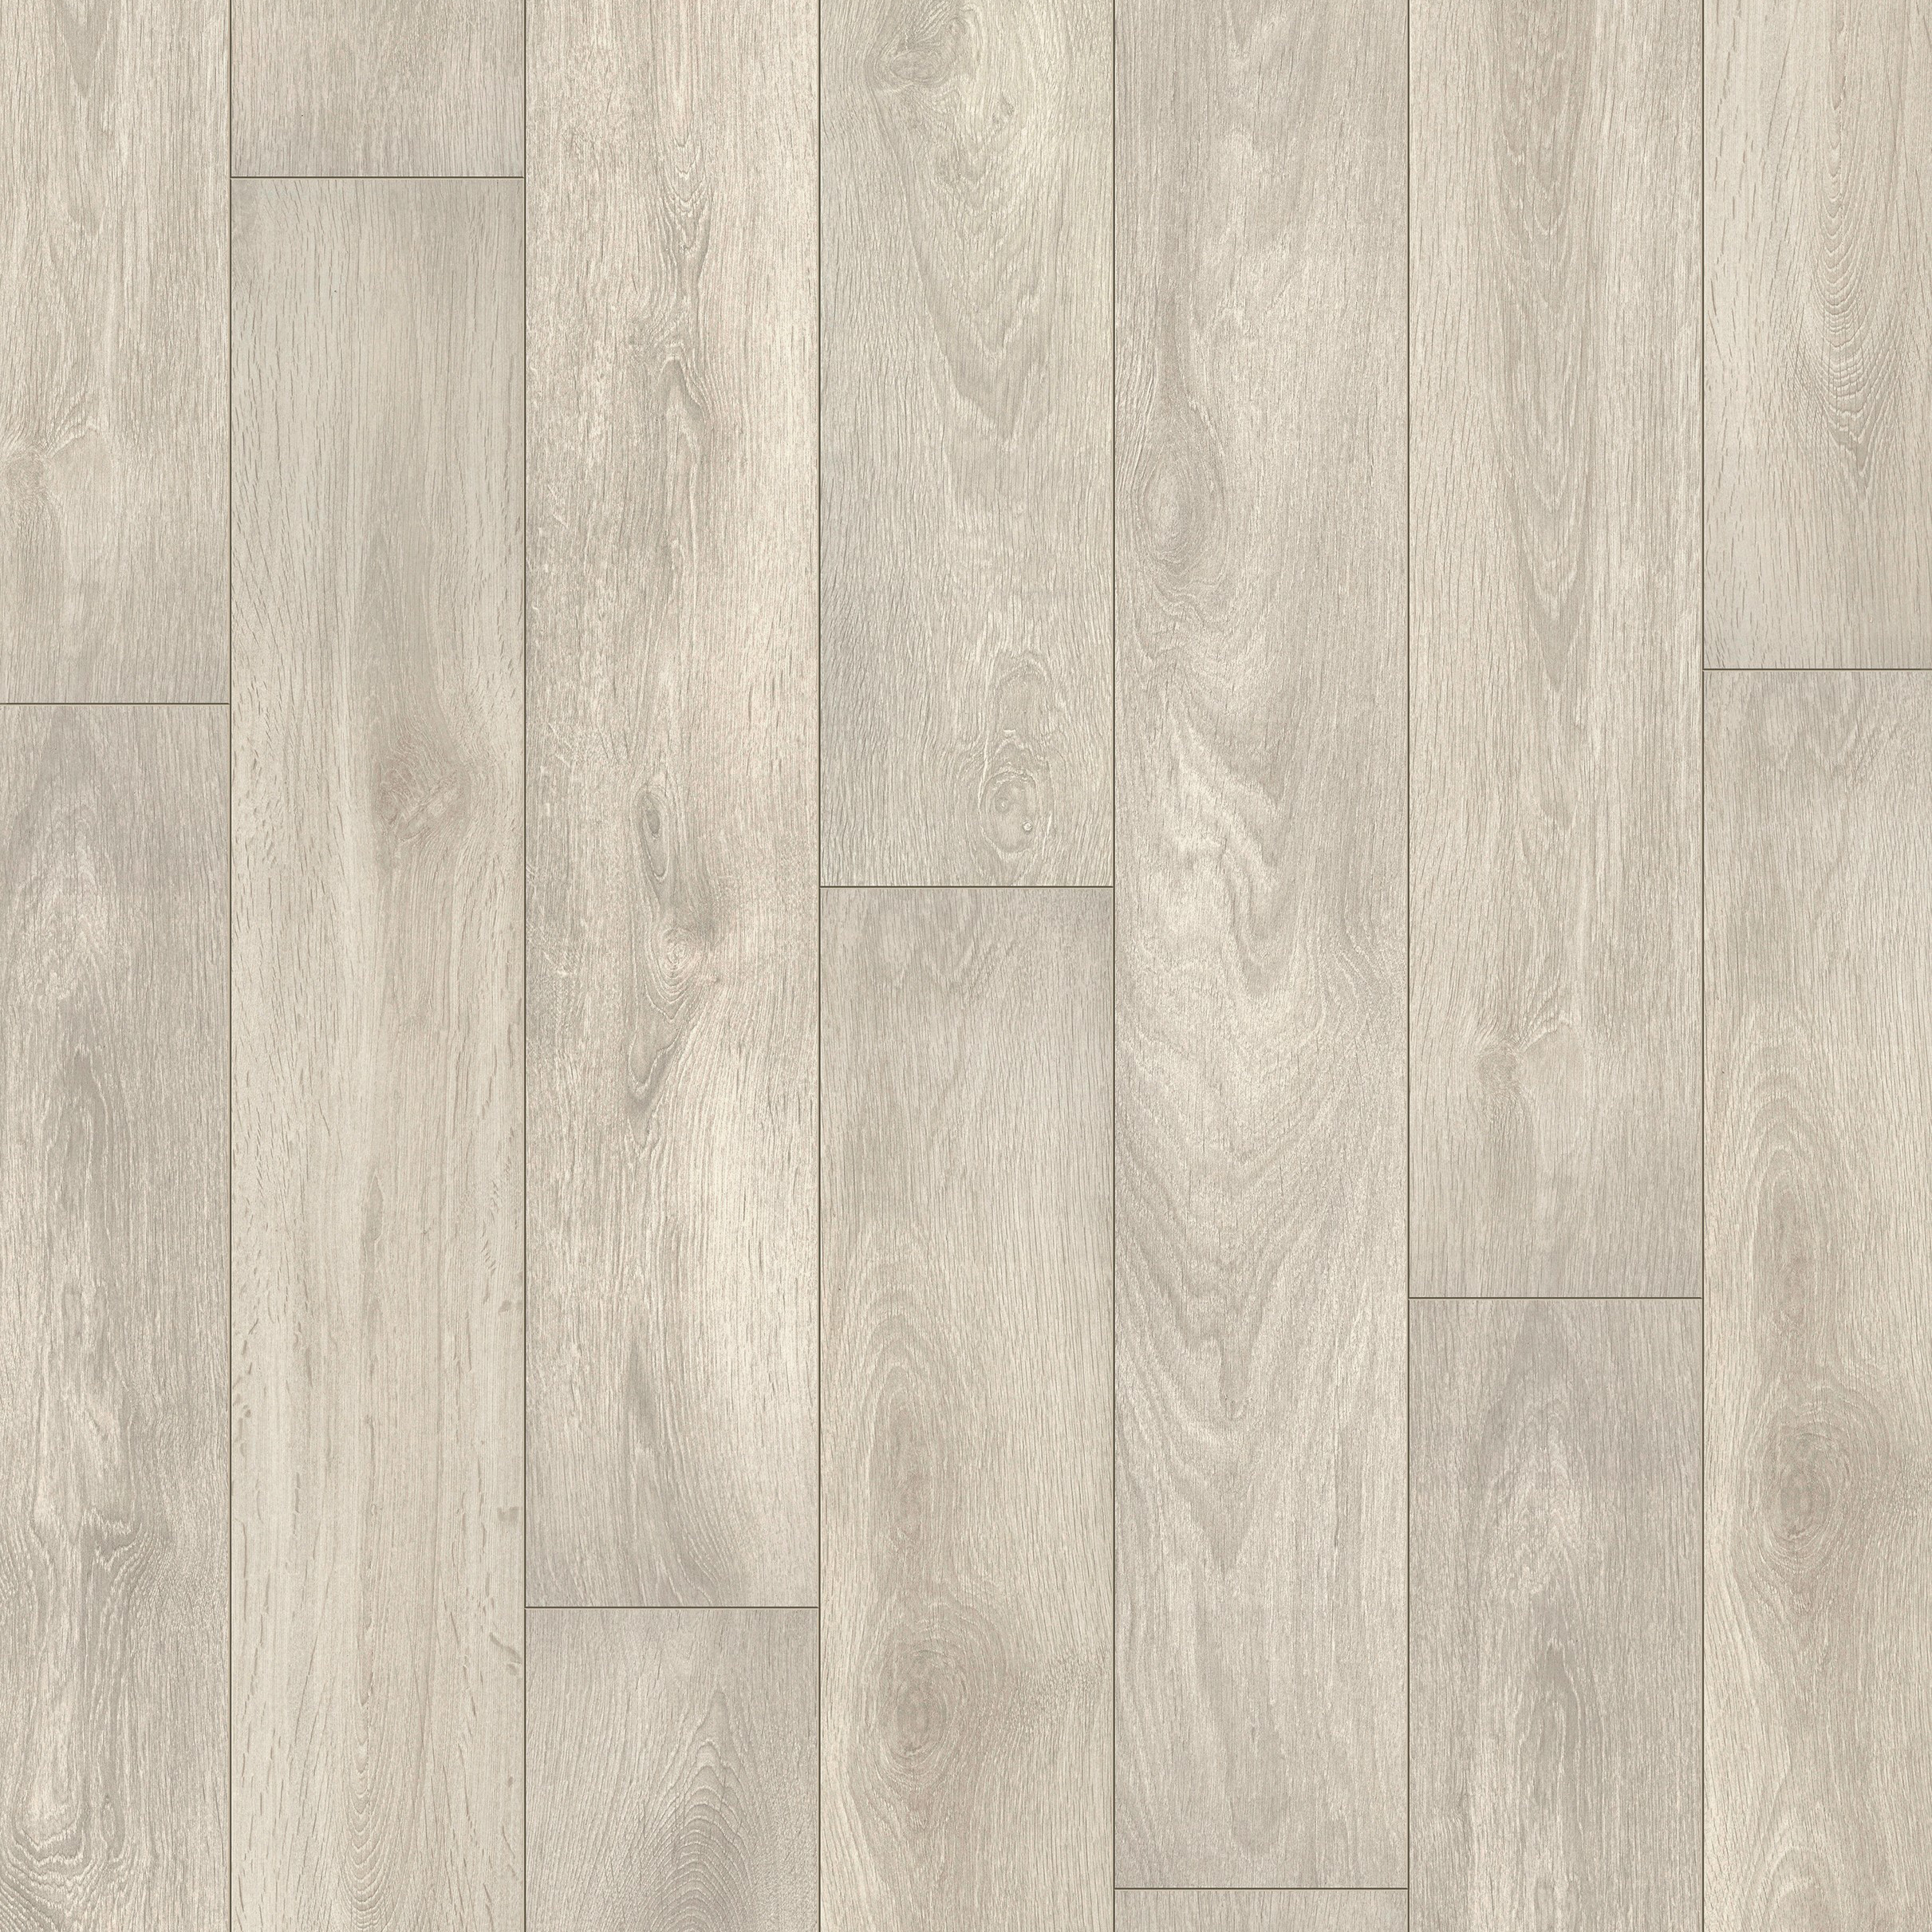 Aspen Light Oak Pure+ 8mm Laminate Flooring - 2.26m2